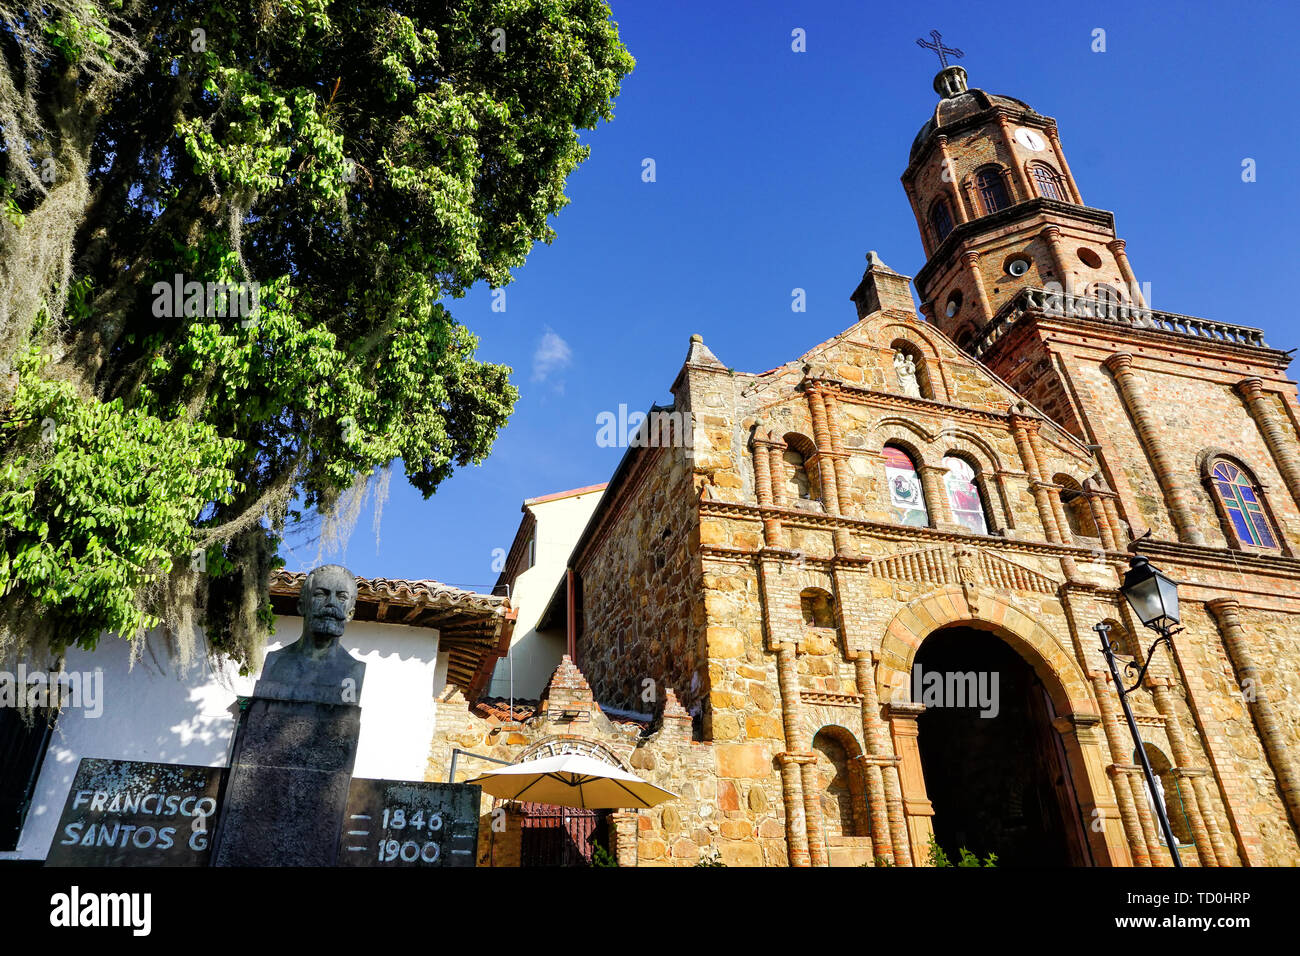 San Joaquin church entrance with Francisco Santos sculpture in Curiti, Santander, Colombia Stock Photo